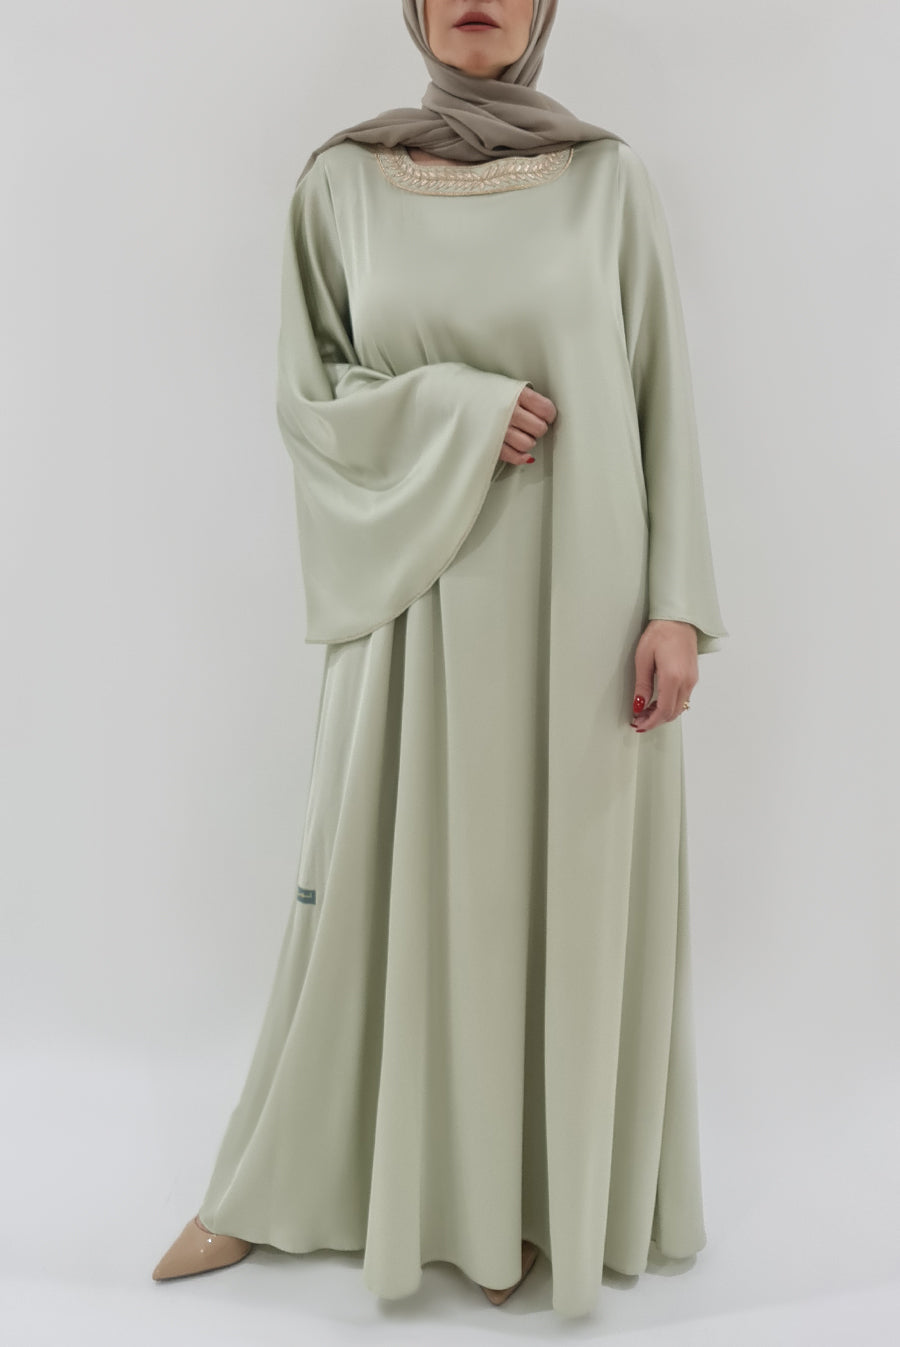 modest dress light green jalabiya - thowby - elegant dresses in dubai 